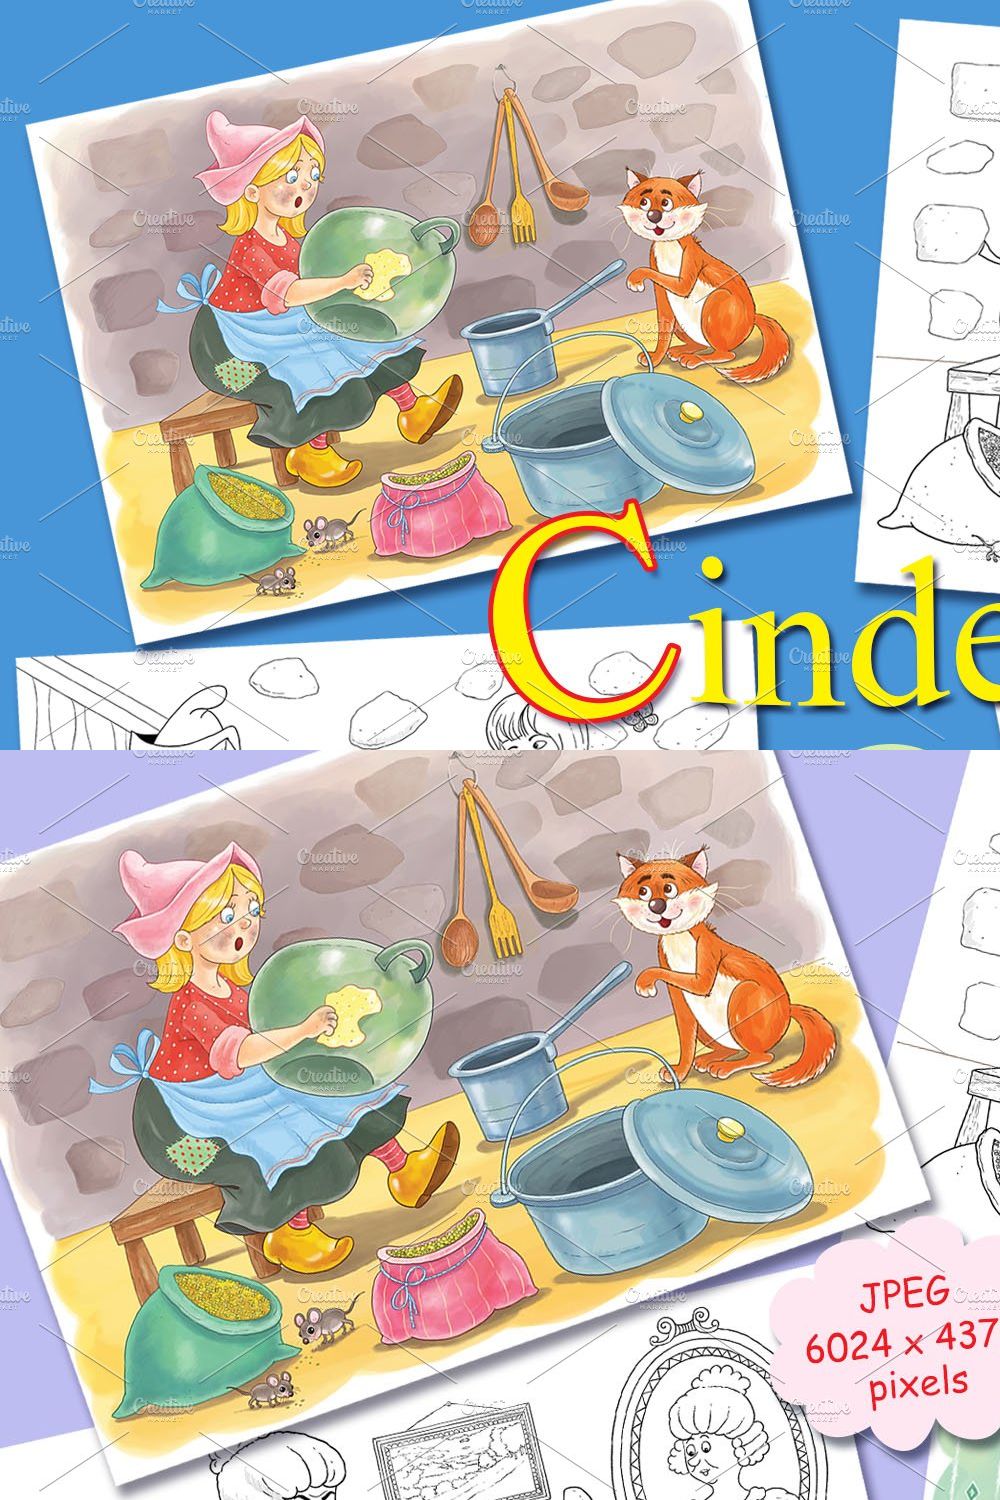 Cinderella bundle. Coloring pages pinterest preview image.